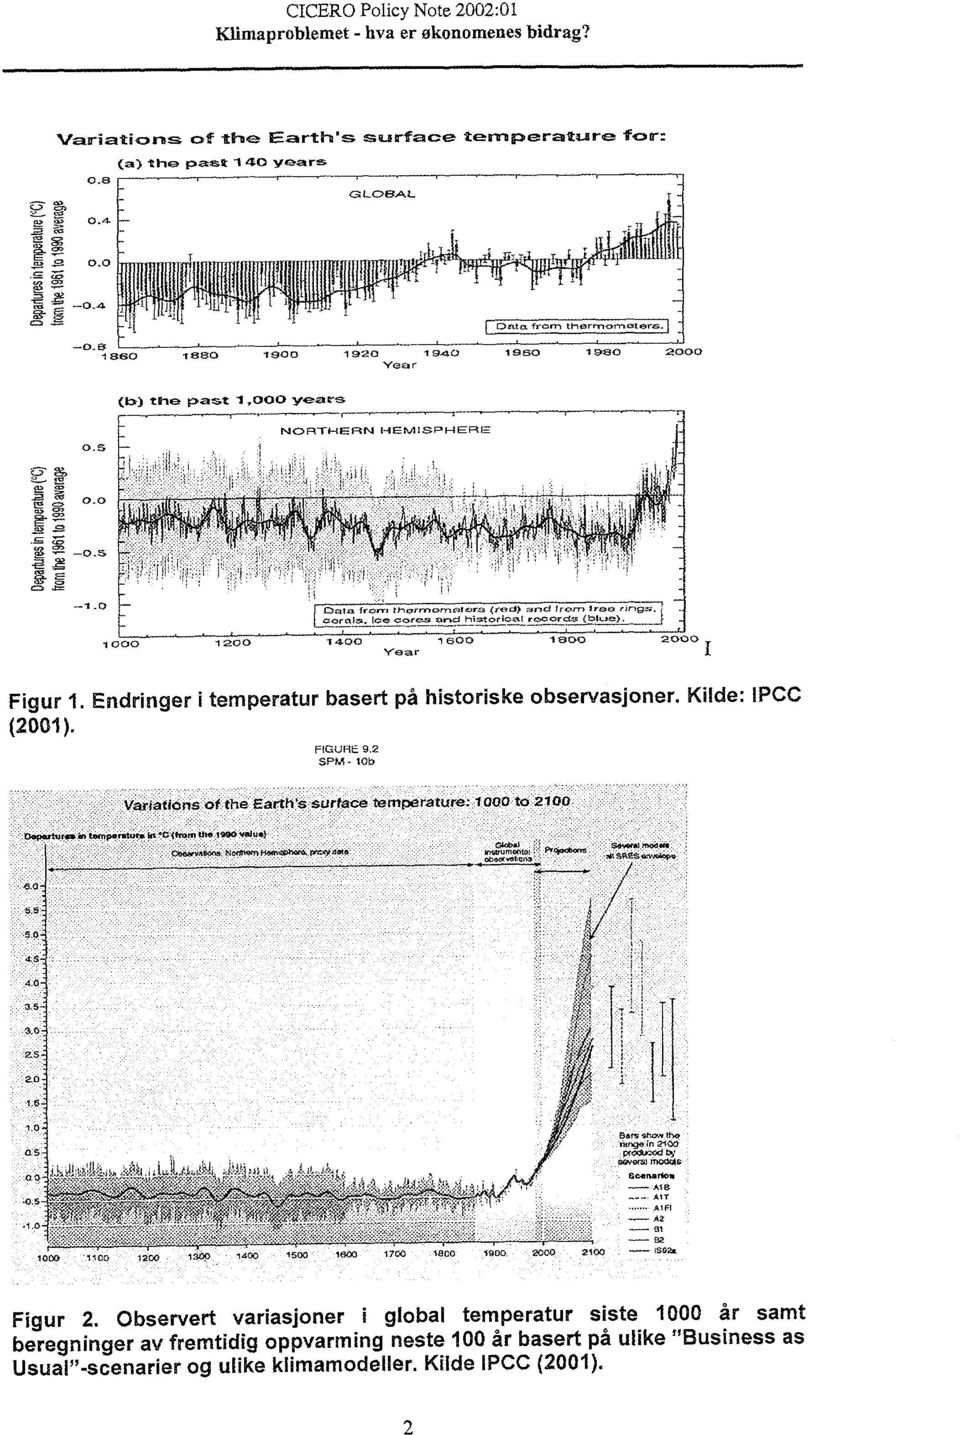 rings, i coral». lo«cores and historical r&oorcjs (ta1uj&>. \ -12OO 14OO 16OO 18OO 3OCO Year 1 Figur 1. Endringer i temperatur basert på historiske observasjonen Kilde: IPCC (2001). $&. ;'. : '":.